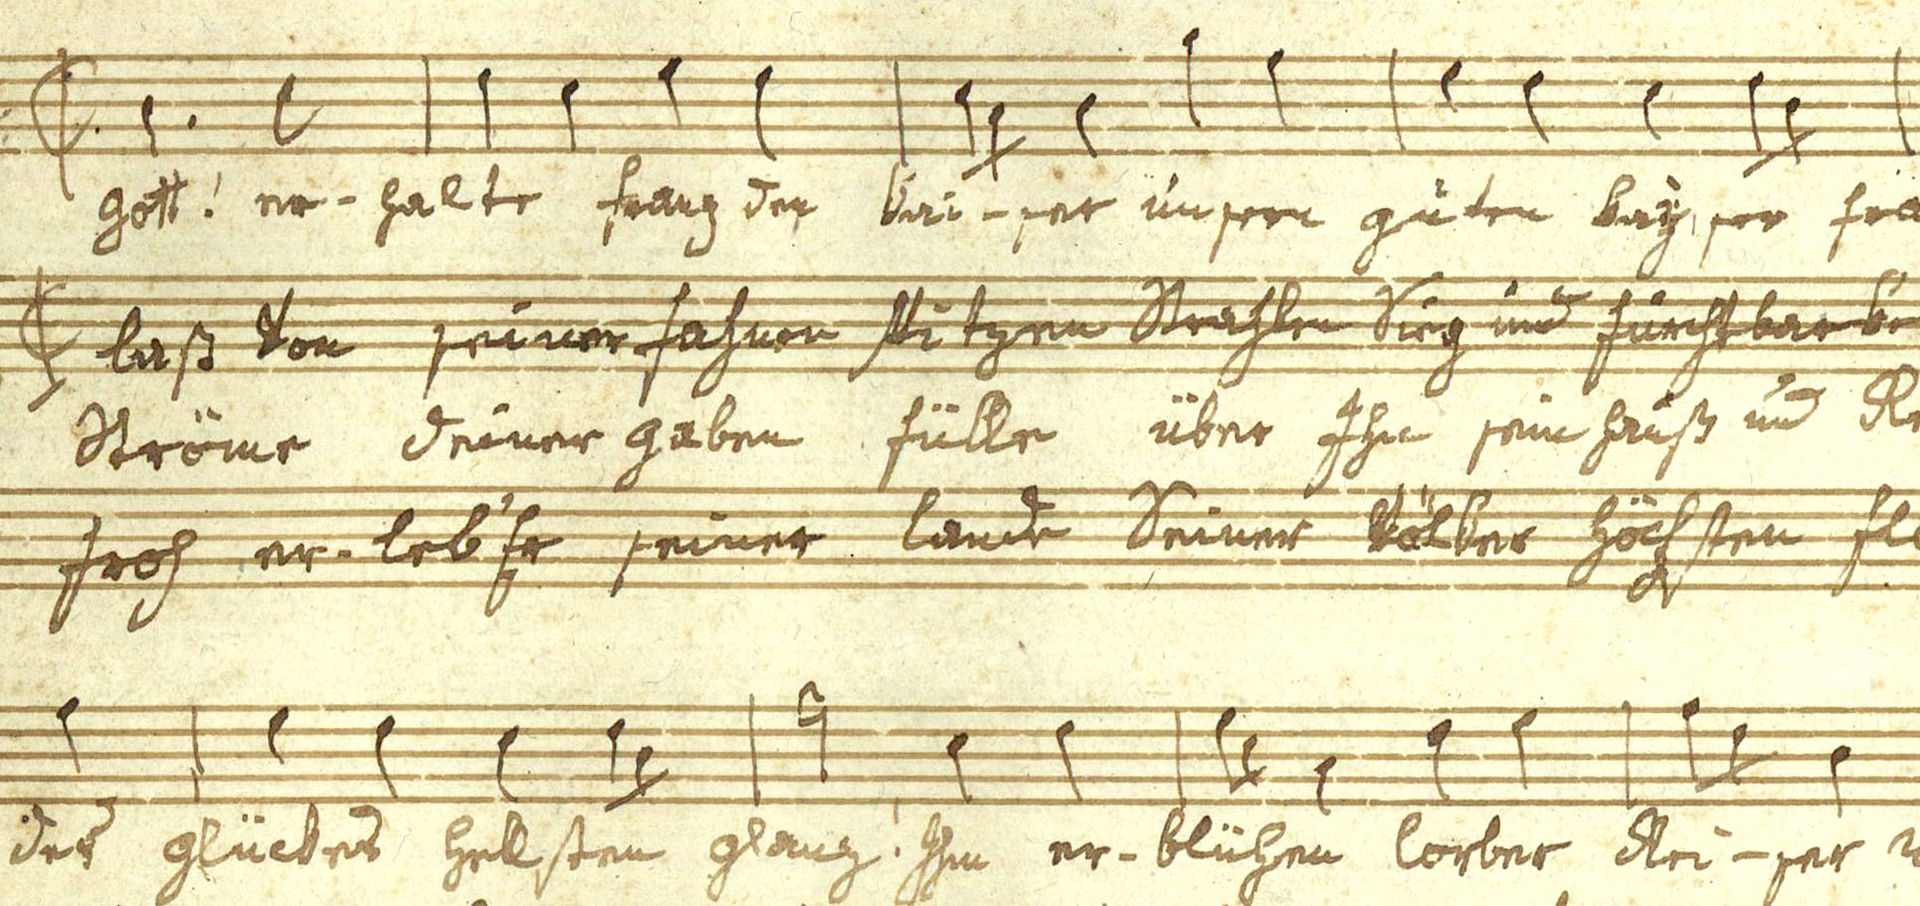 Haydn's "Gott erhalte" 